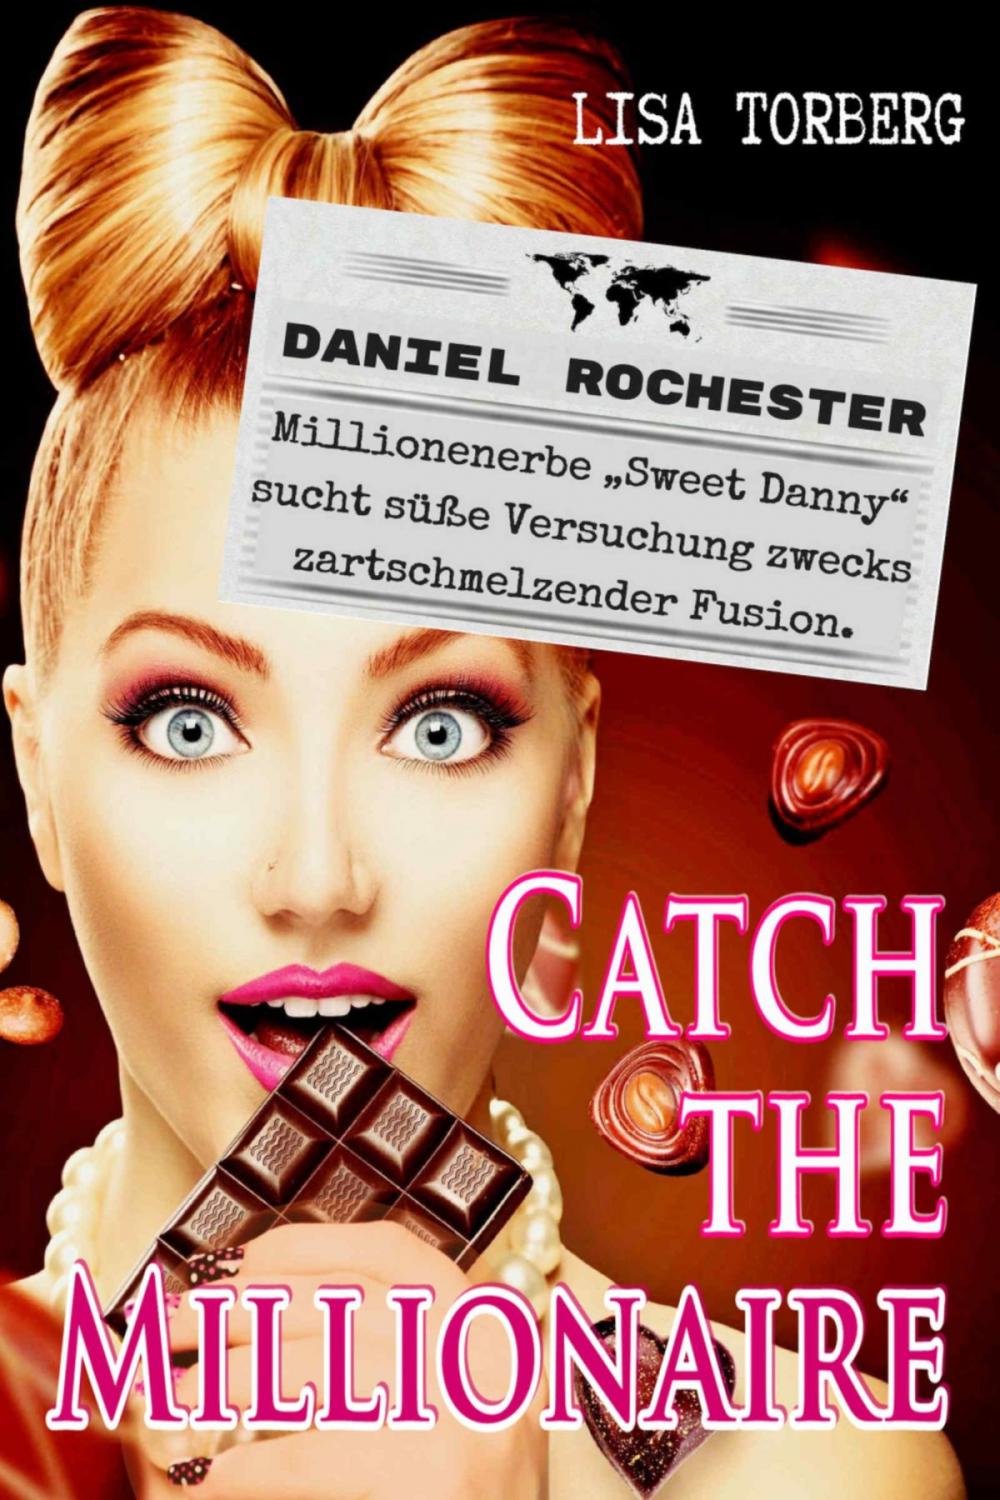 Big bigCover of Catch the Millionaire - Daniel Rochester